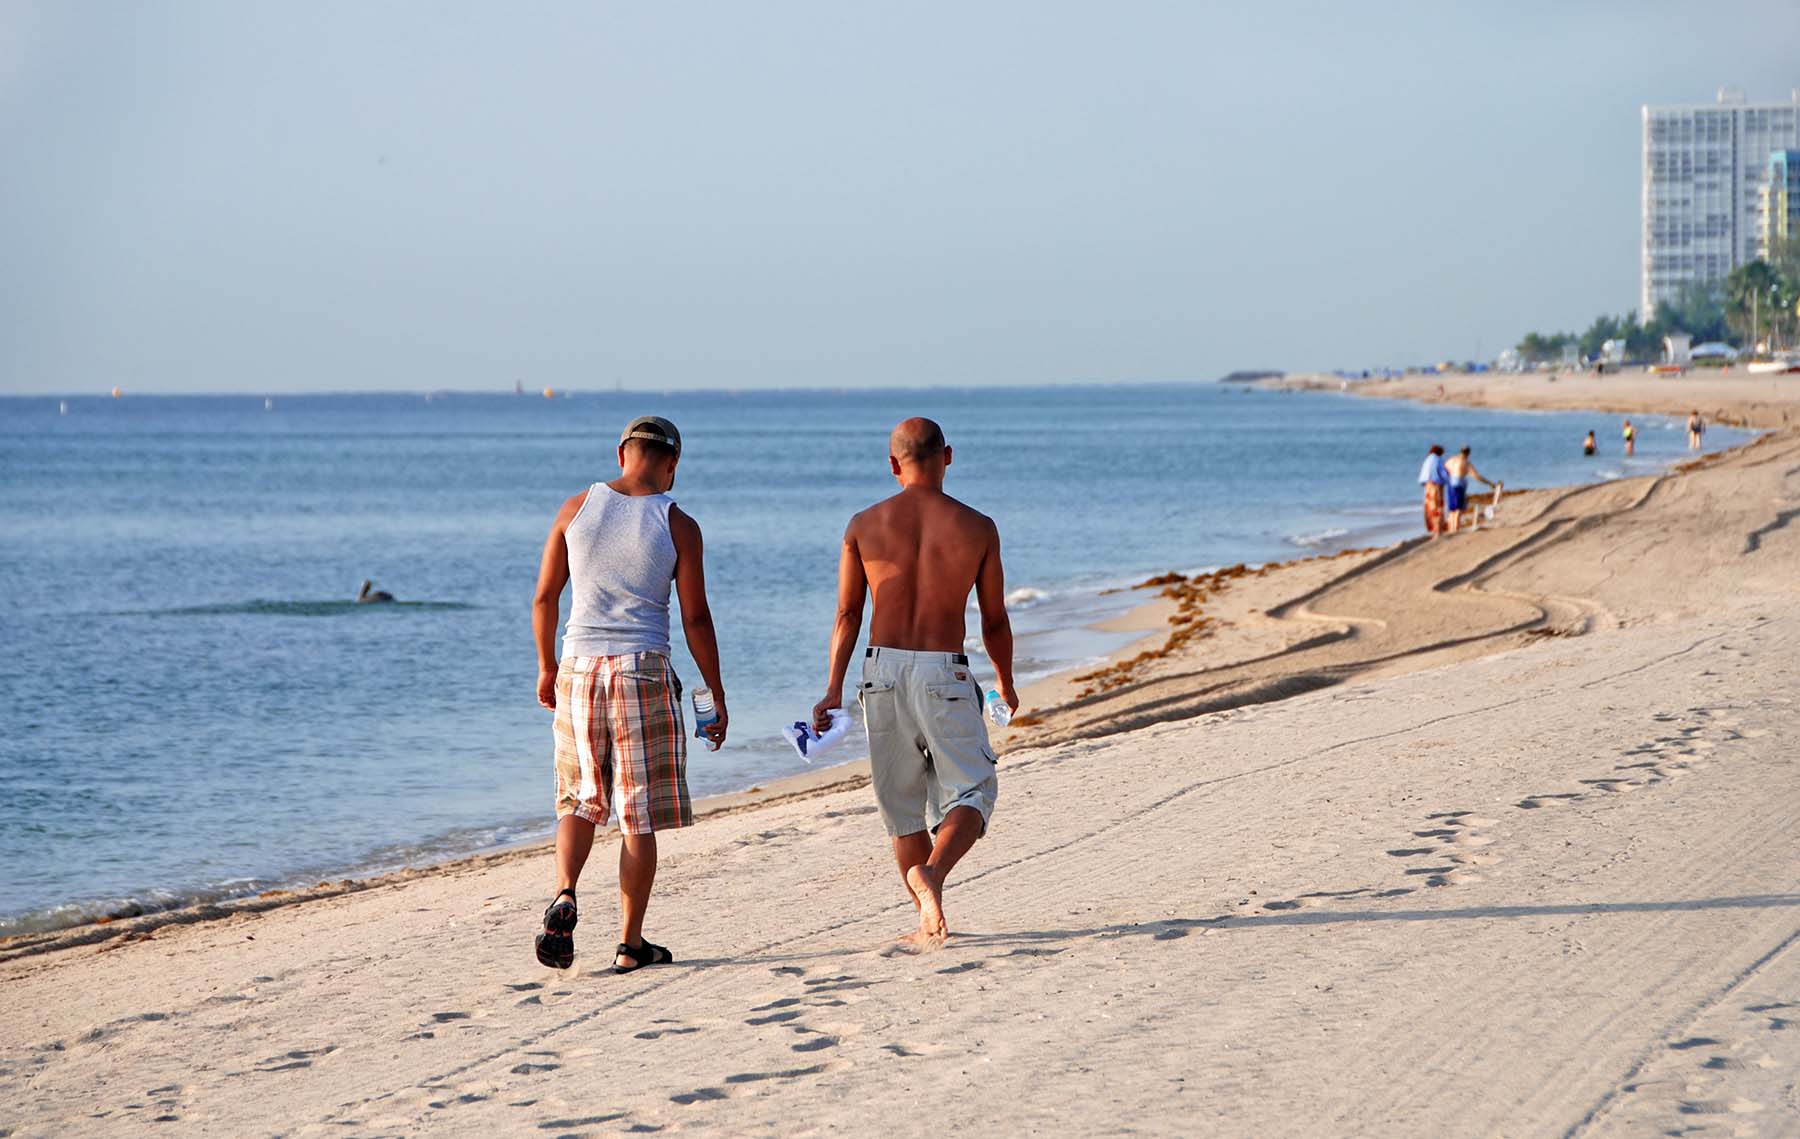 Two men walking down the beach in Miami.